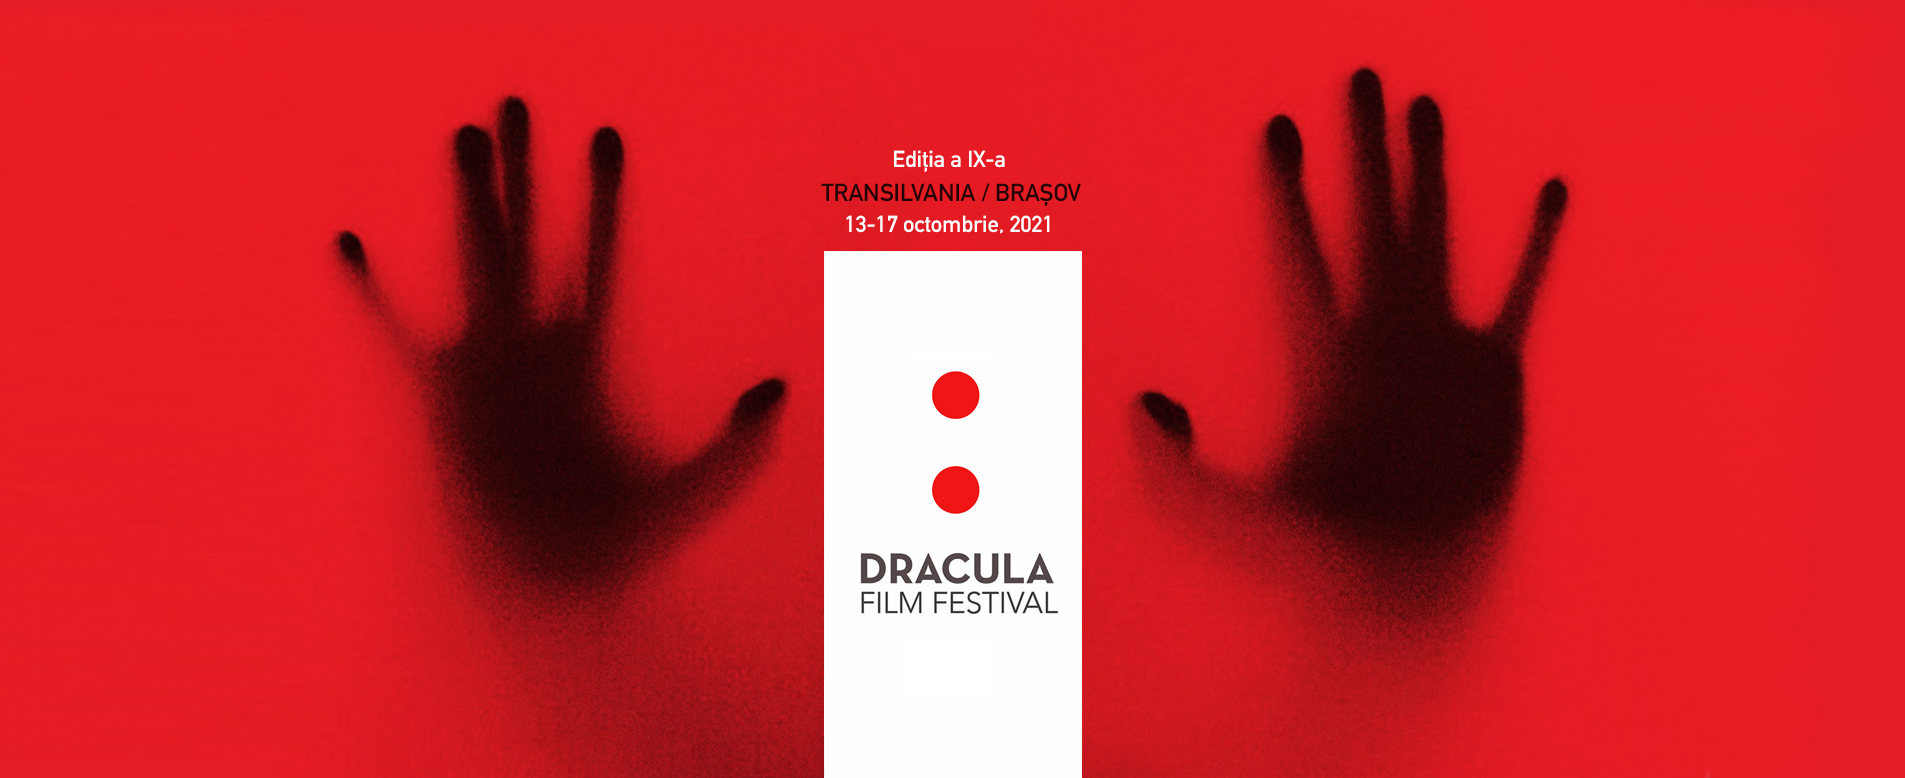 Dracula Film Festival 2021